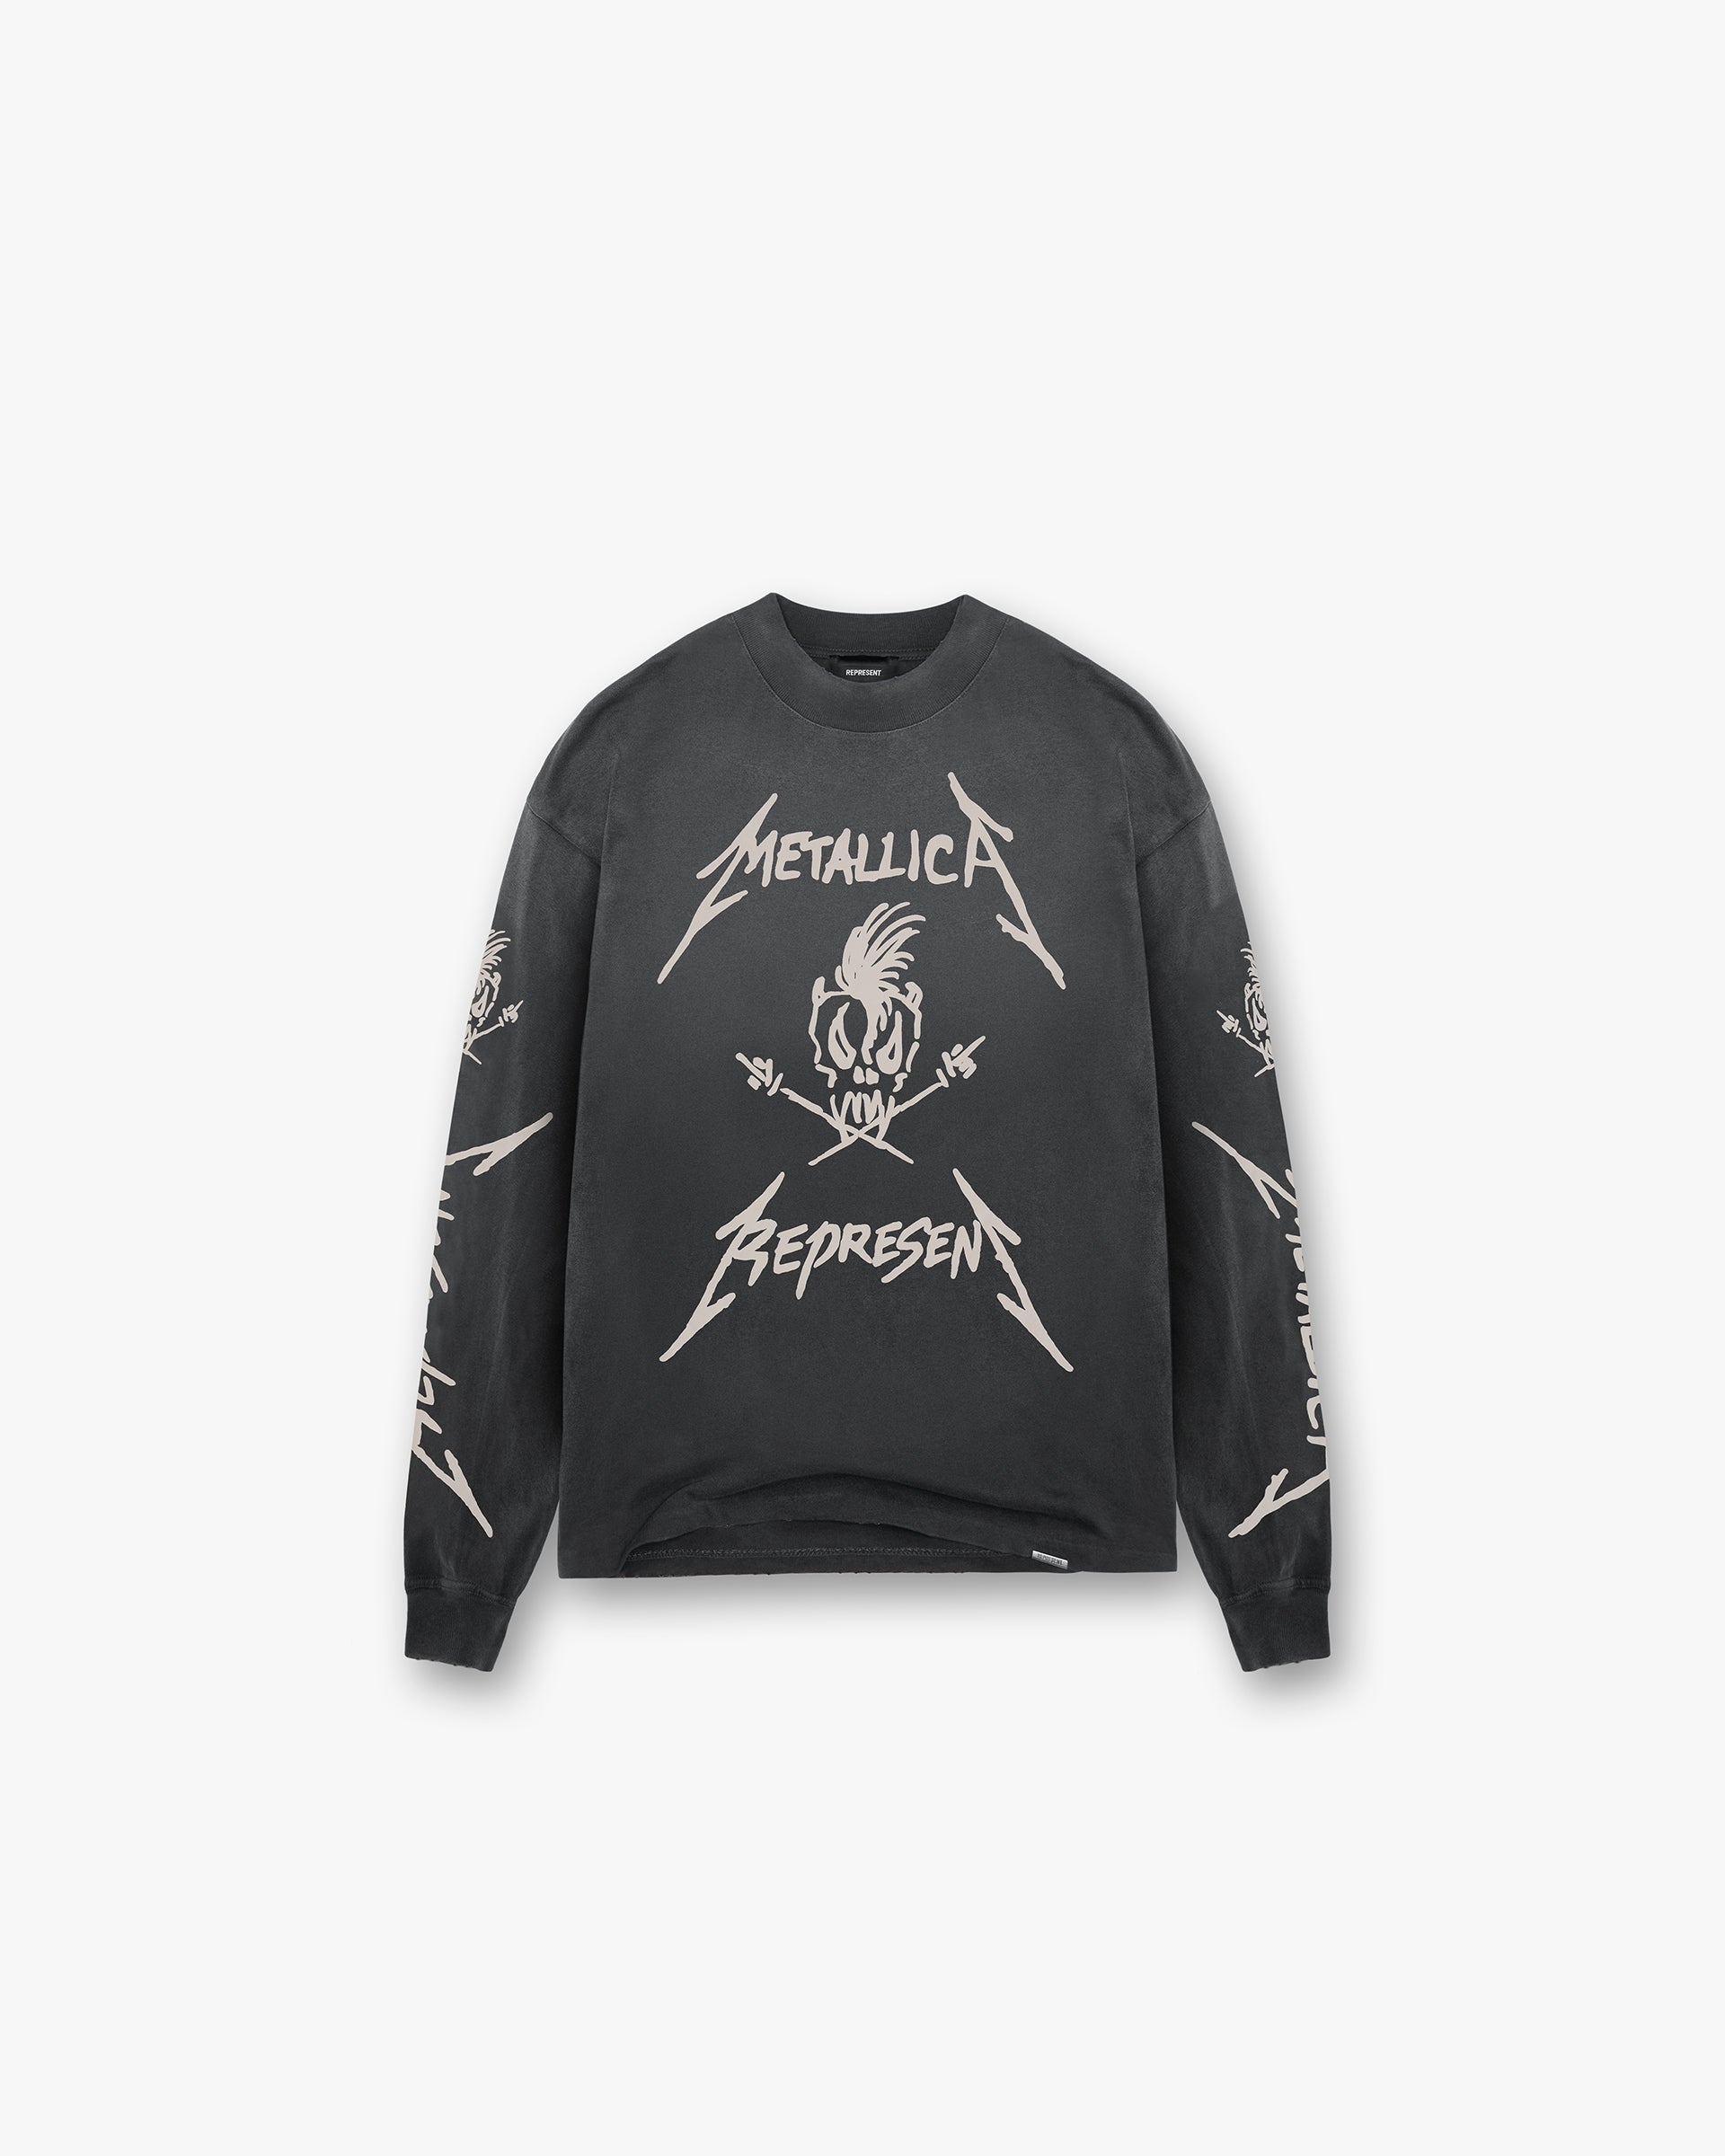 Represent X Metallica Garage Inc Long Sleeve T-Shirt - Stained Black